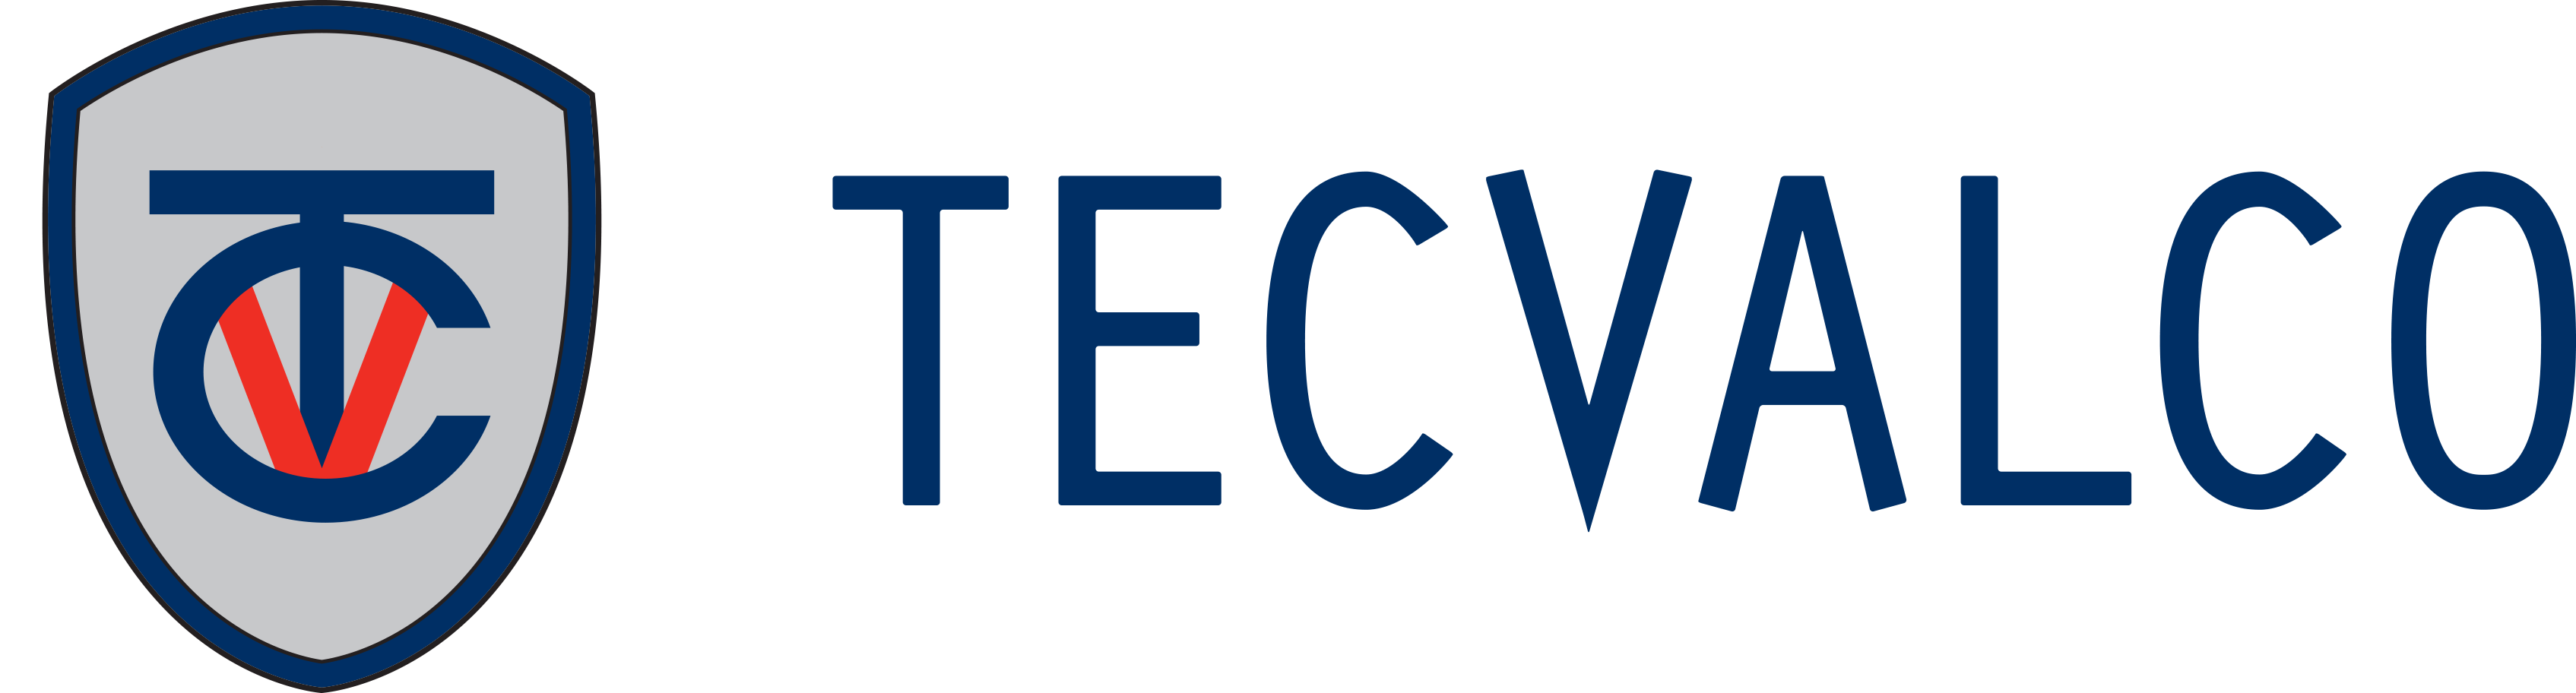 1784-tecvalco-logo-2017-horizontal-spot-colour-16442595601111.png